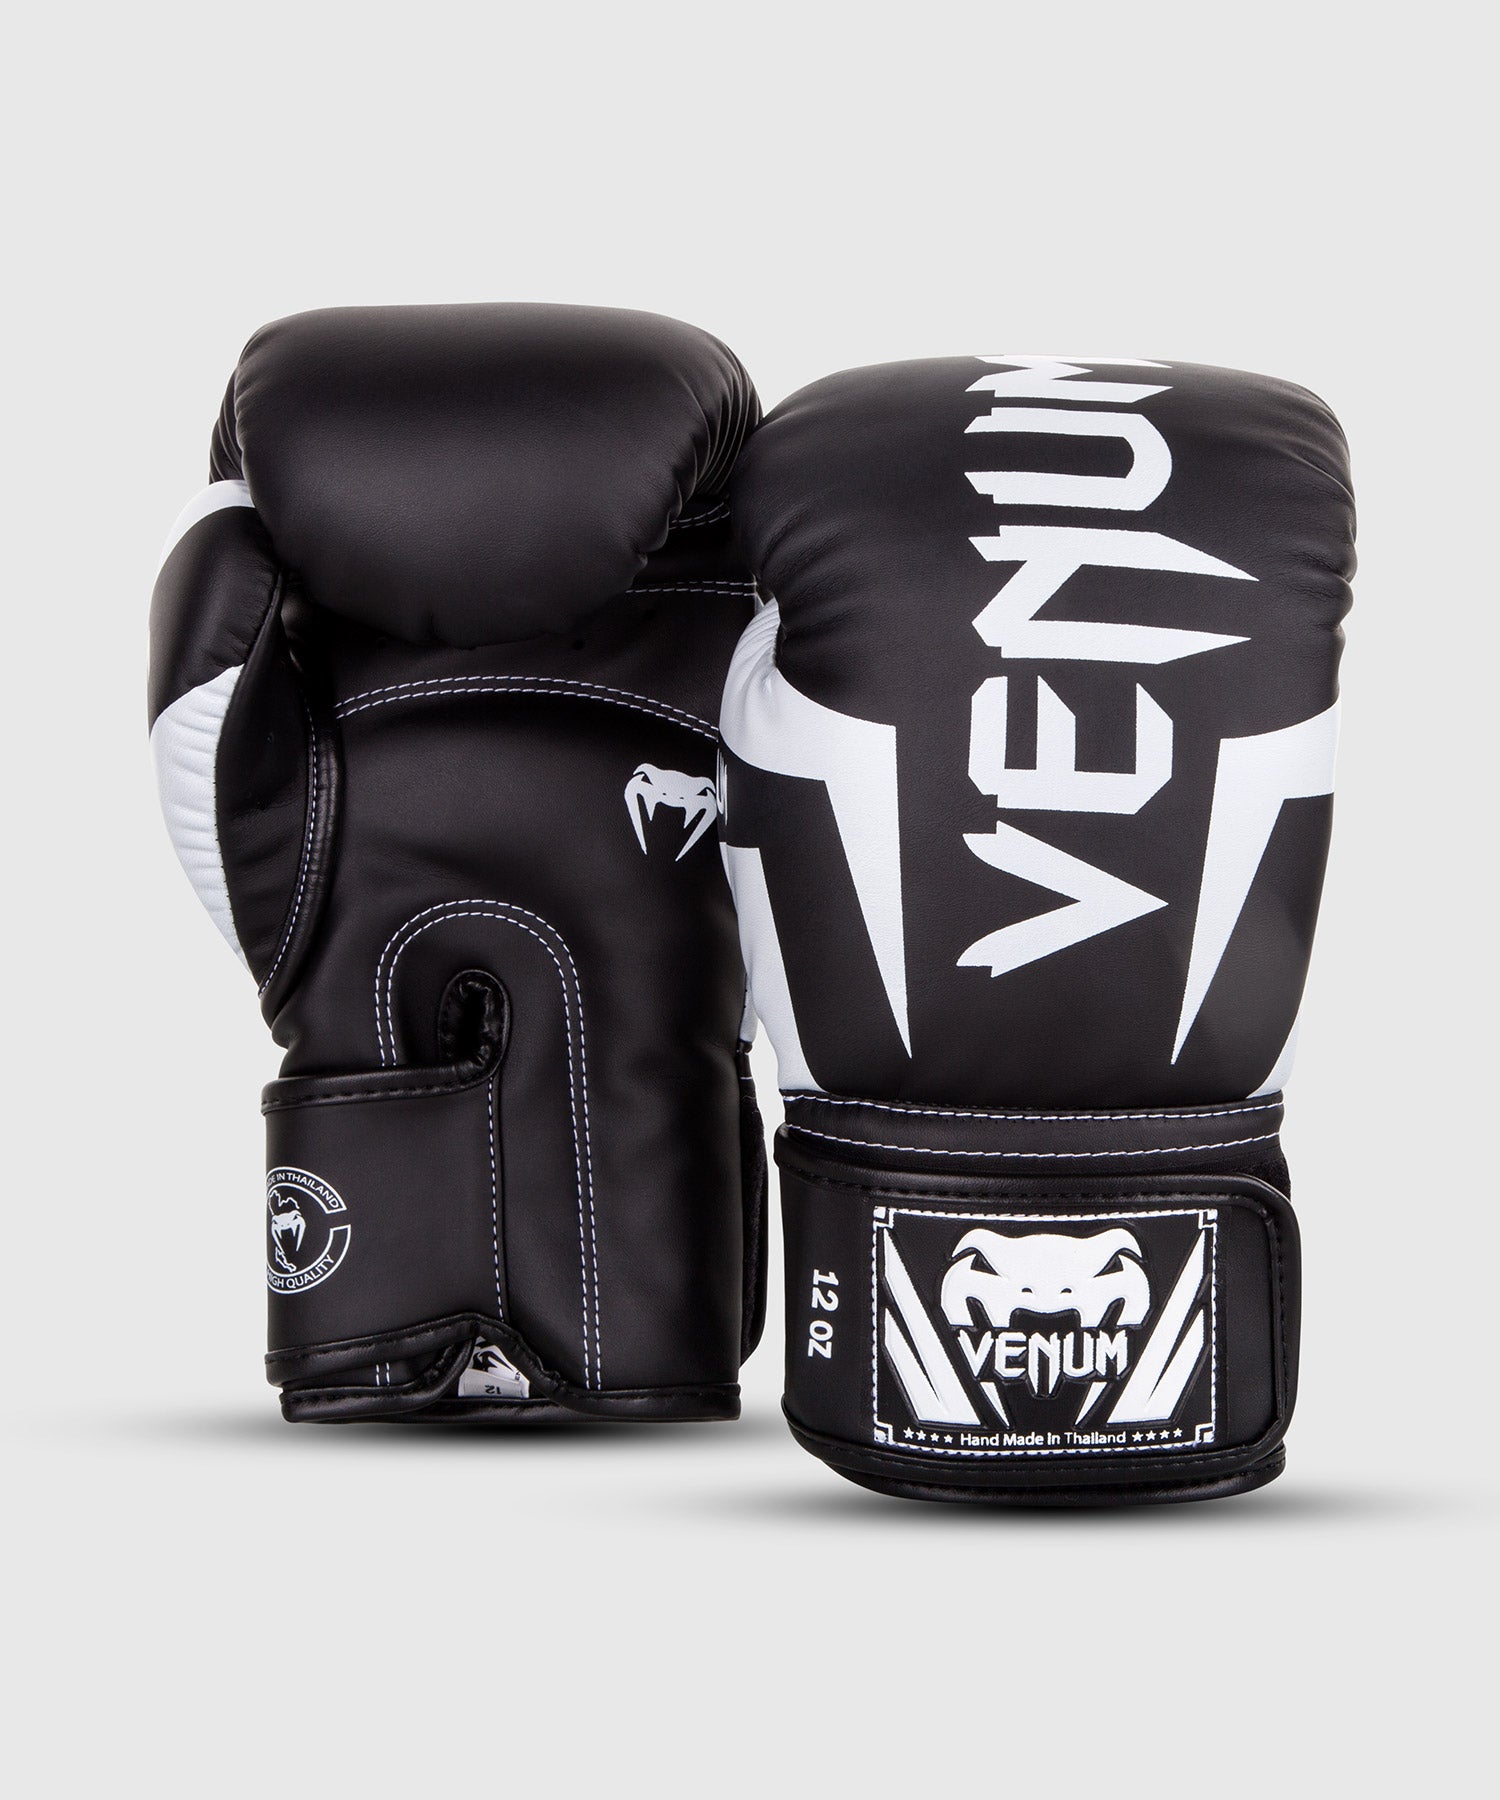 Venum Elite Evo ボクシンググローブ - グレー ホワイト